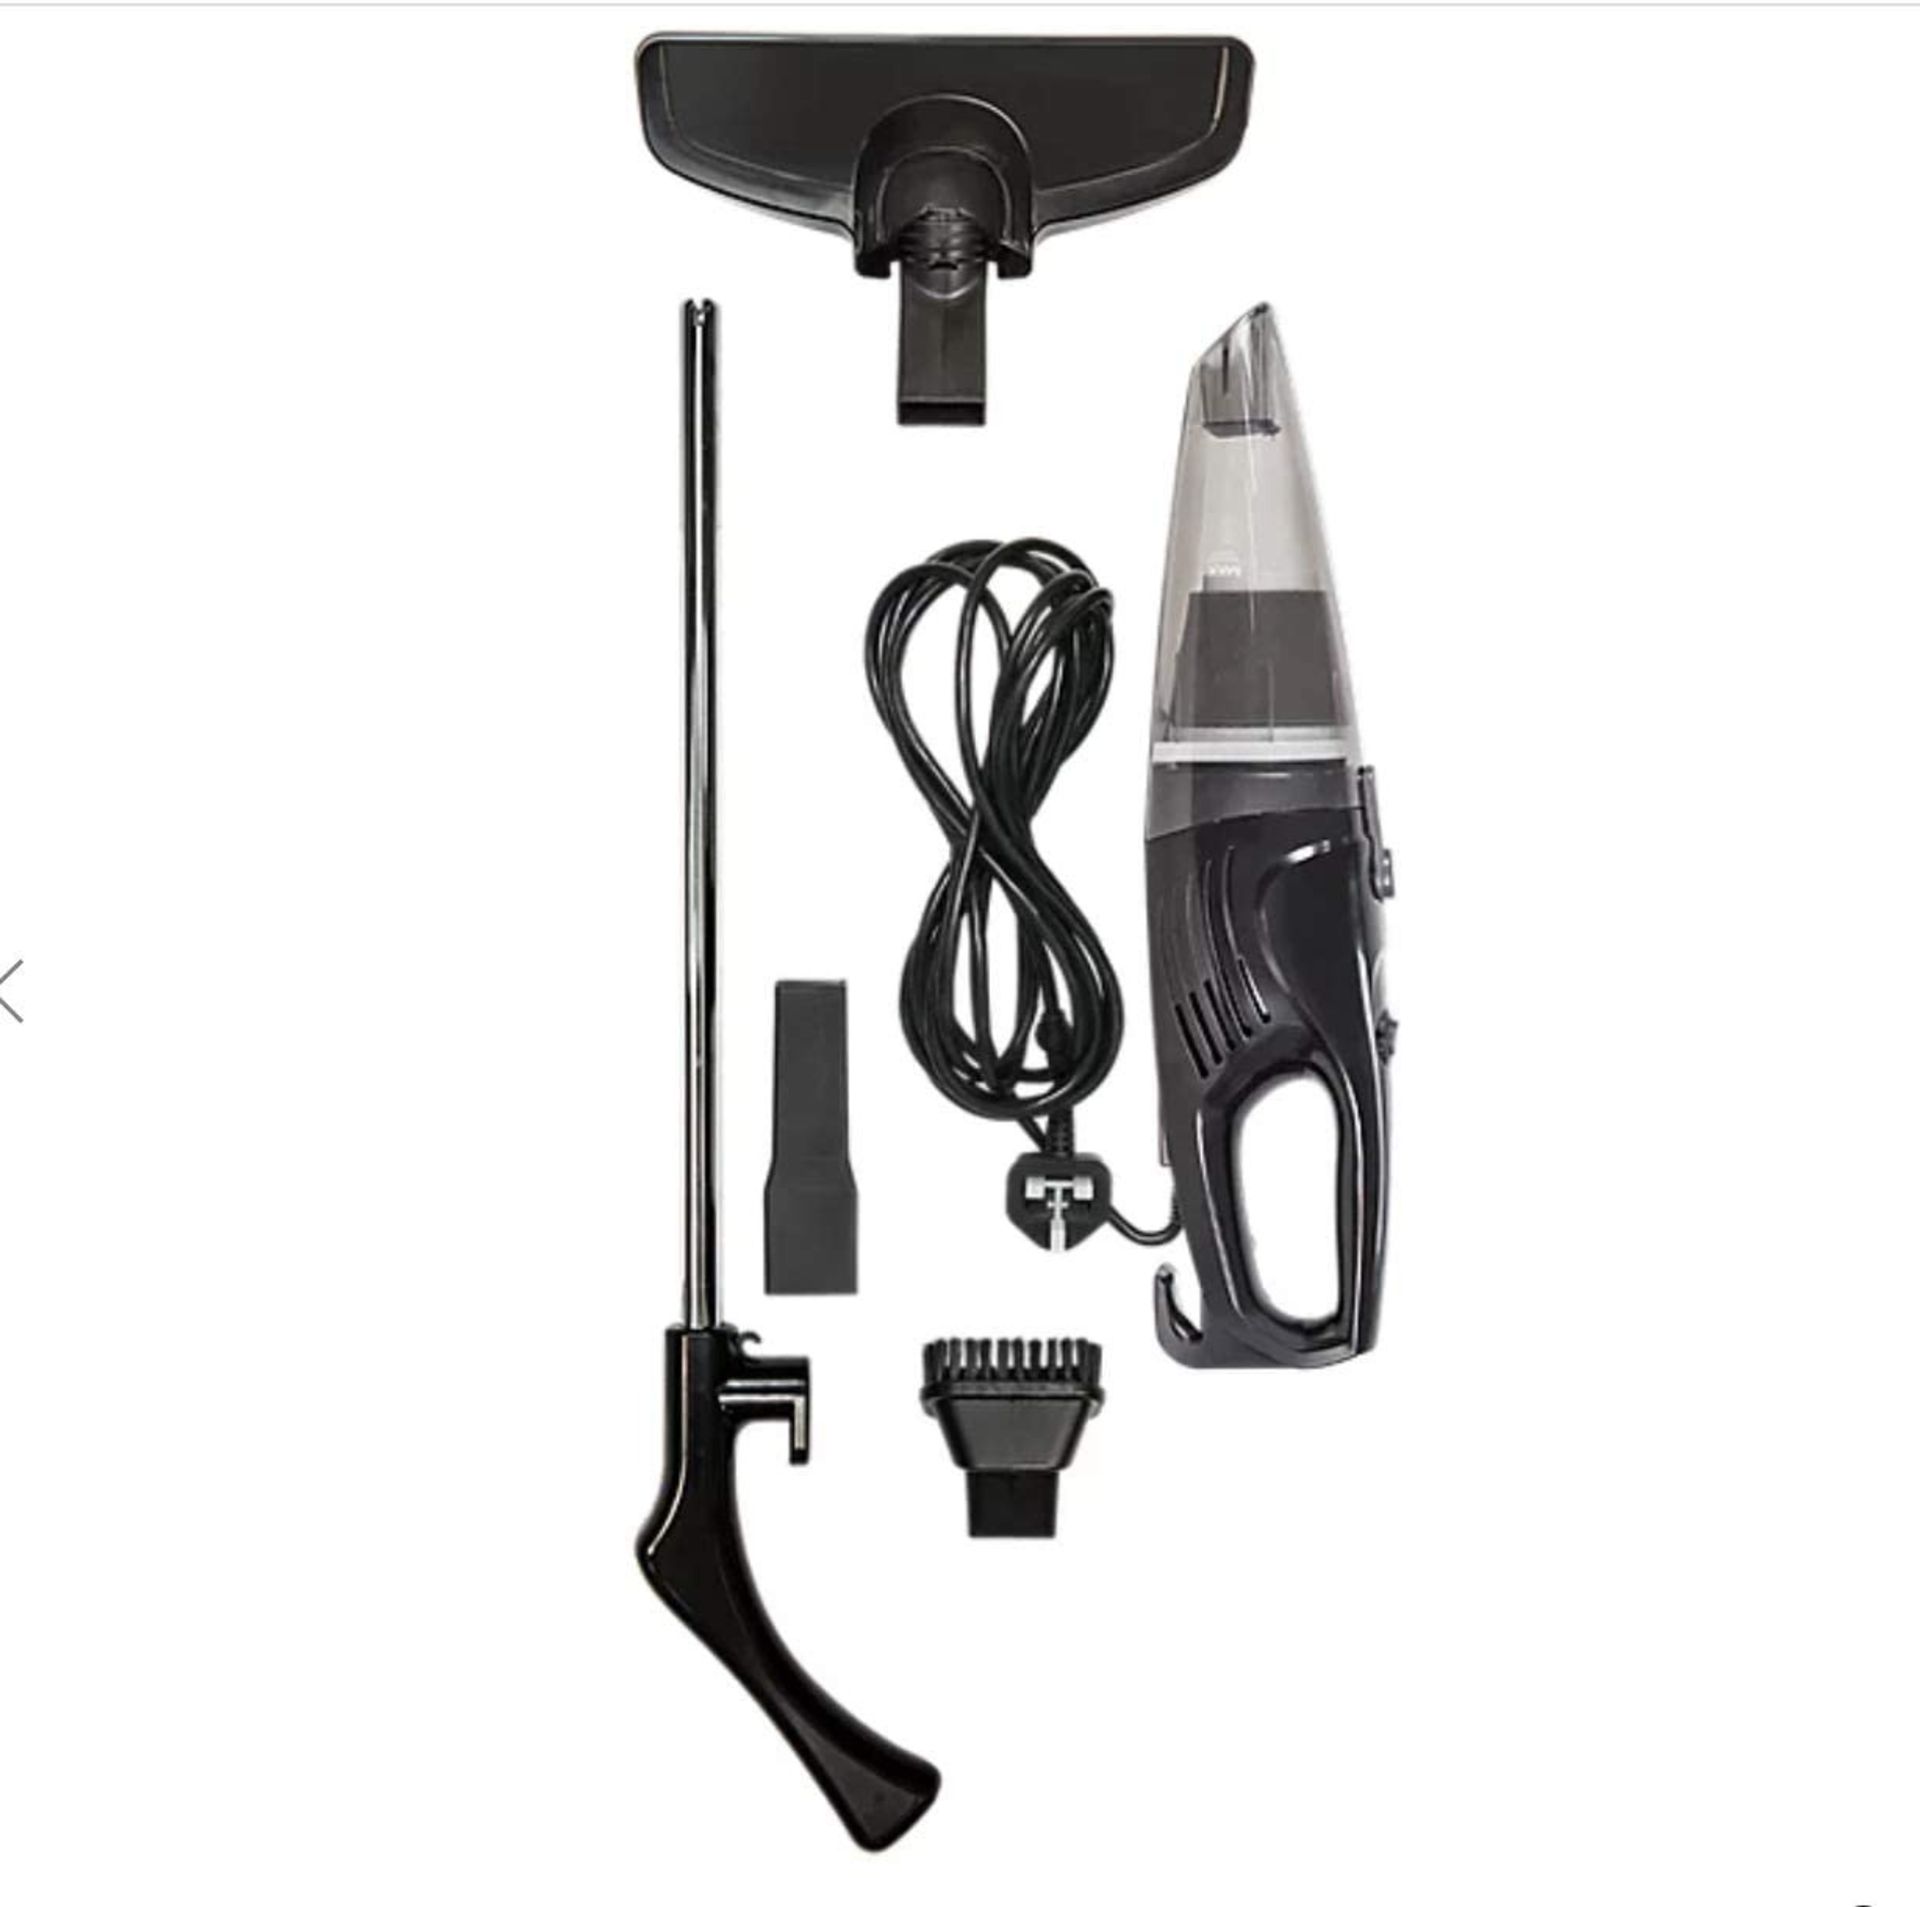 Goblin Lightweight Handheld Stick Vacuum Cleaner Gsv101b-19 Black Corded - FREE DELIVERY - Image 3 of 3